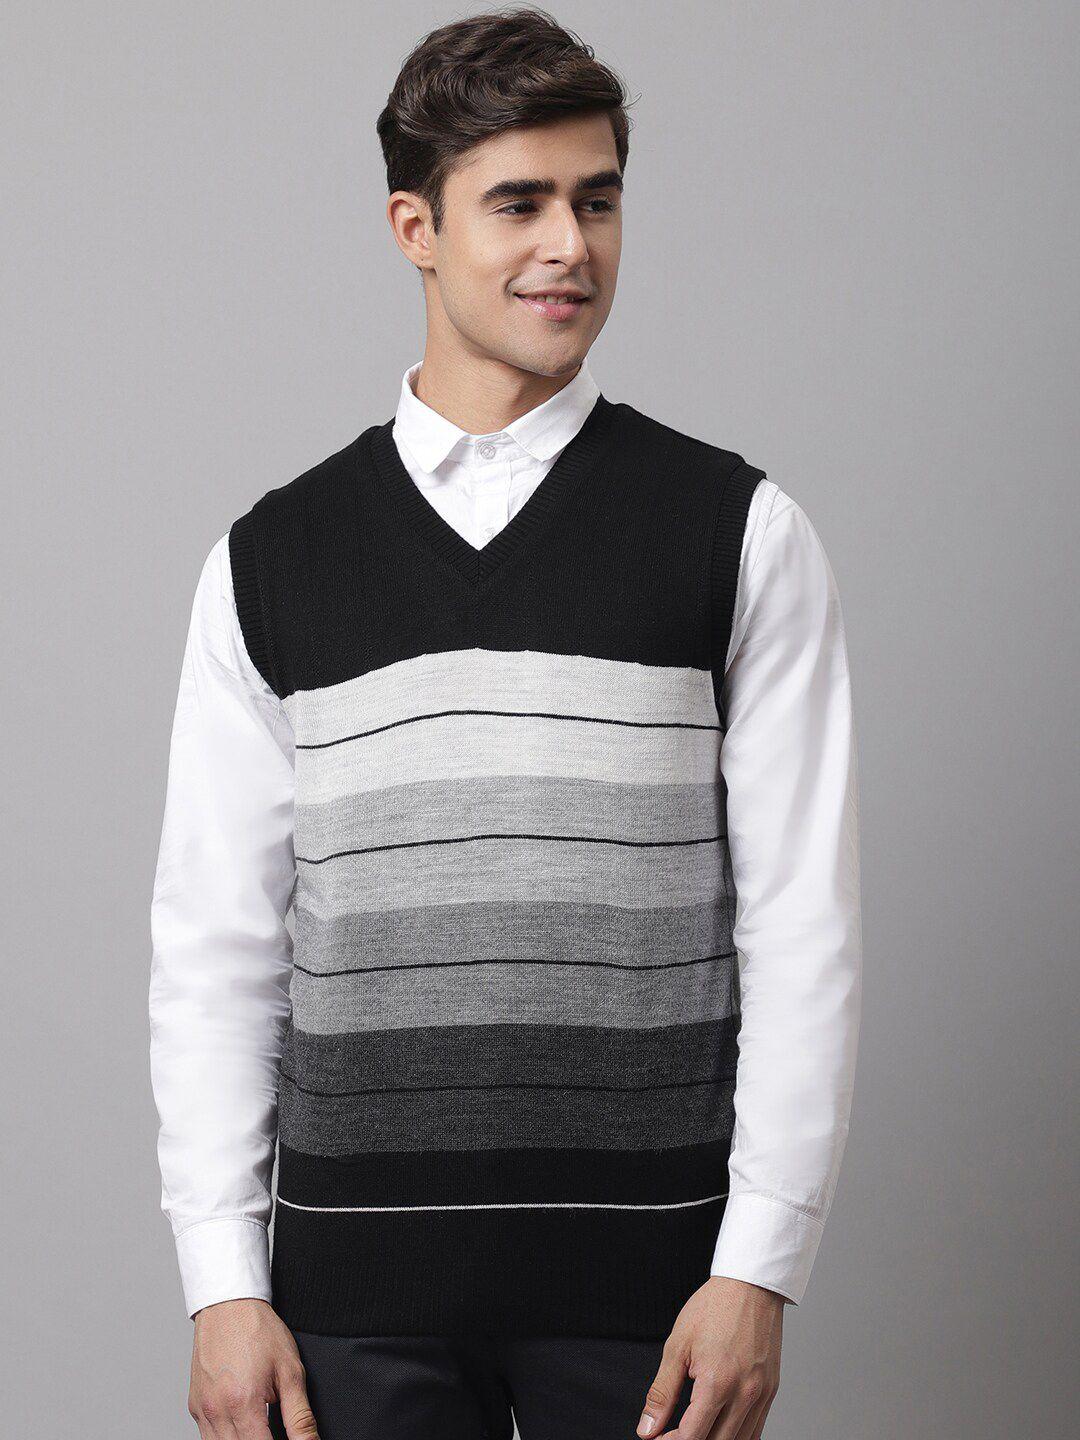 Cantabil Men Black & White Striped Sweater Vest